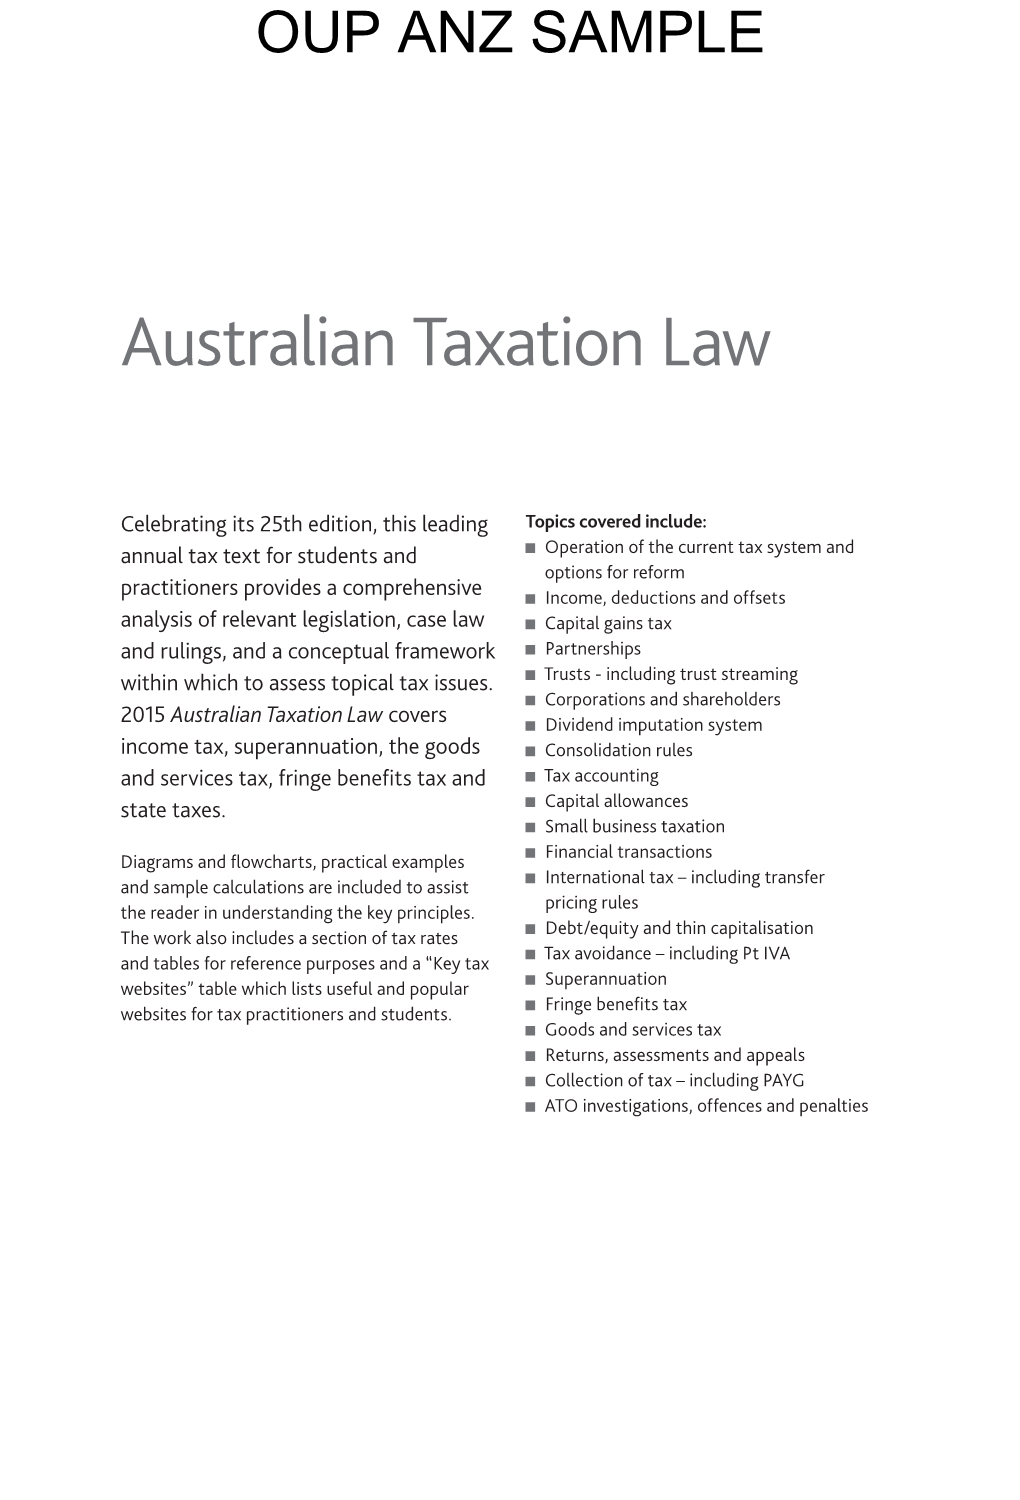 Australian Taxation Law